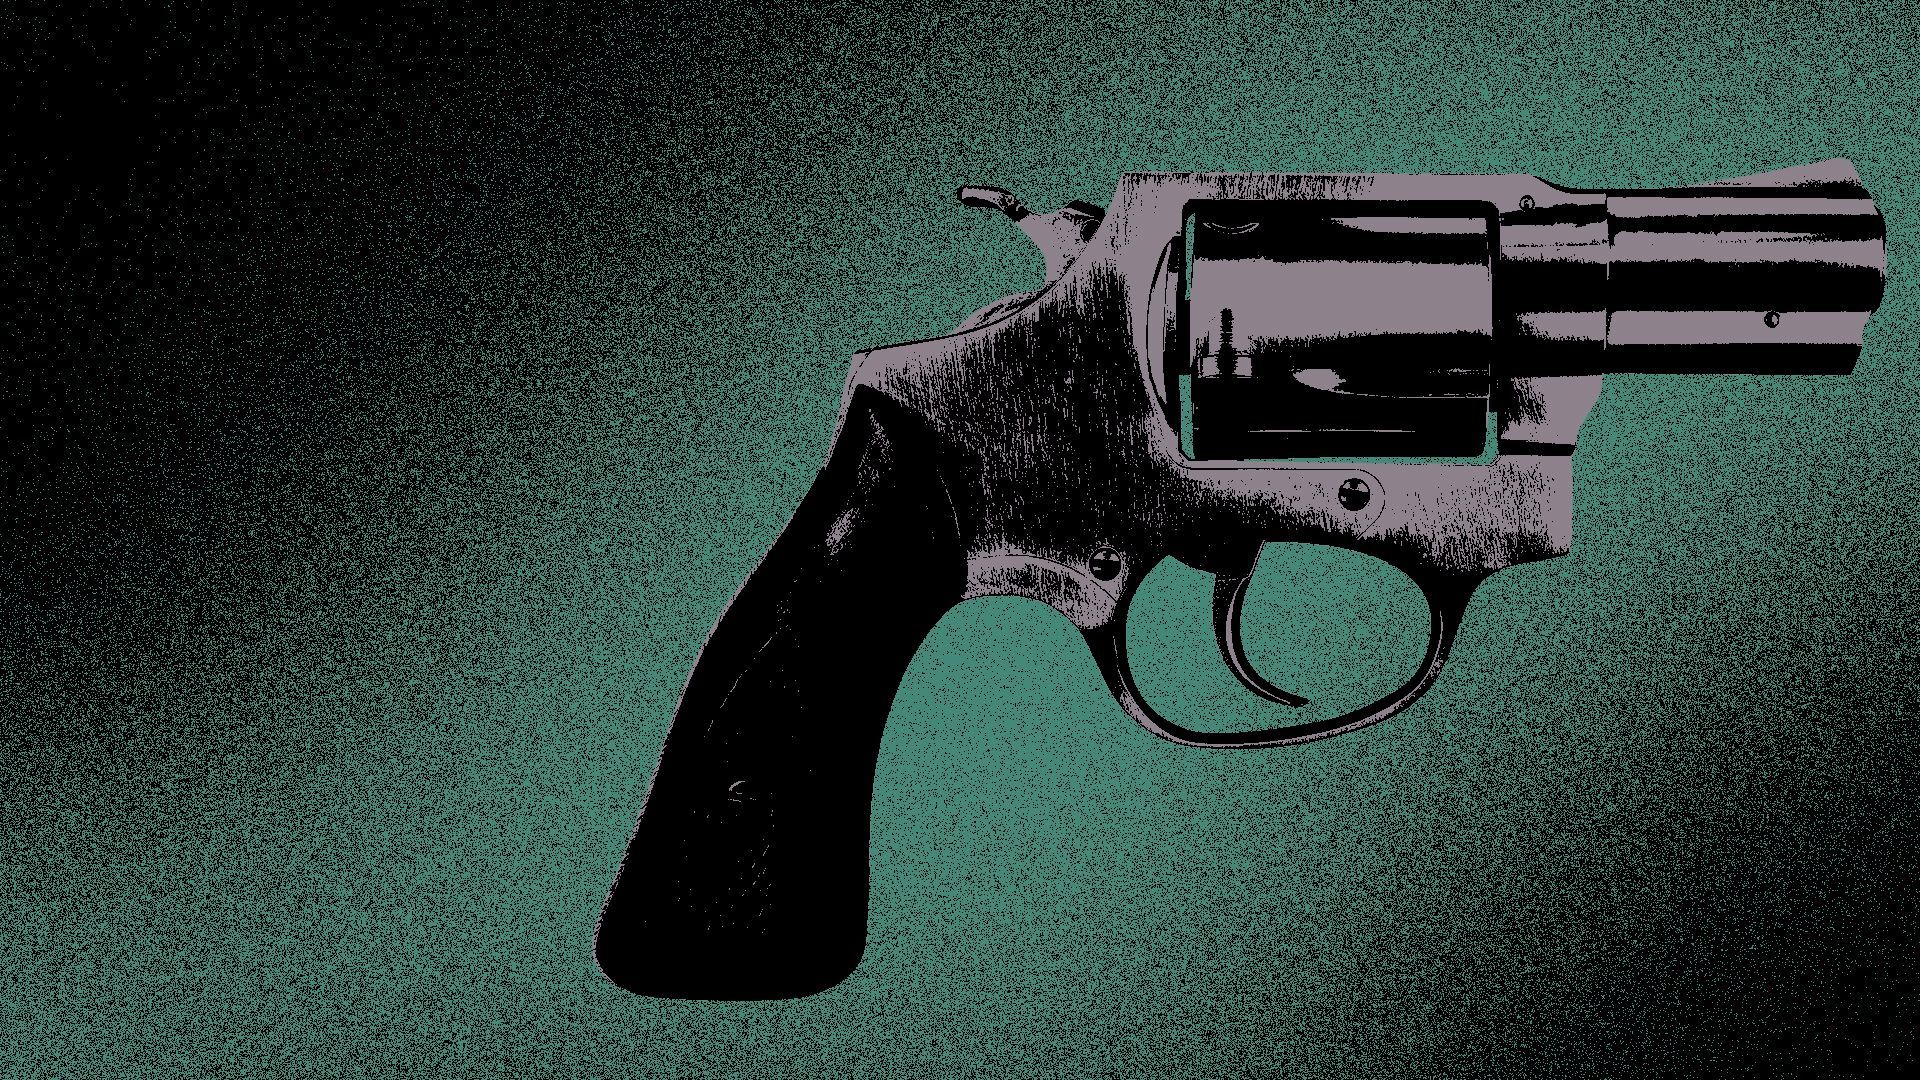 Illustration of a .38 caliber handgun.